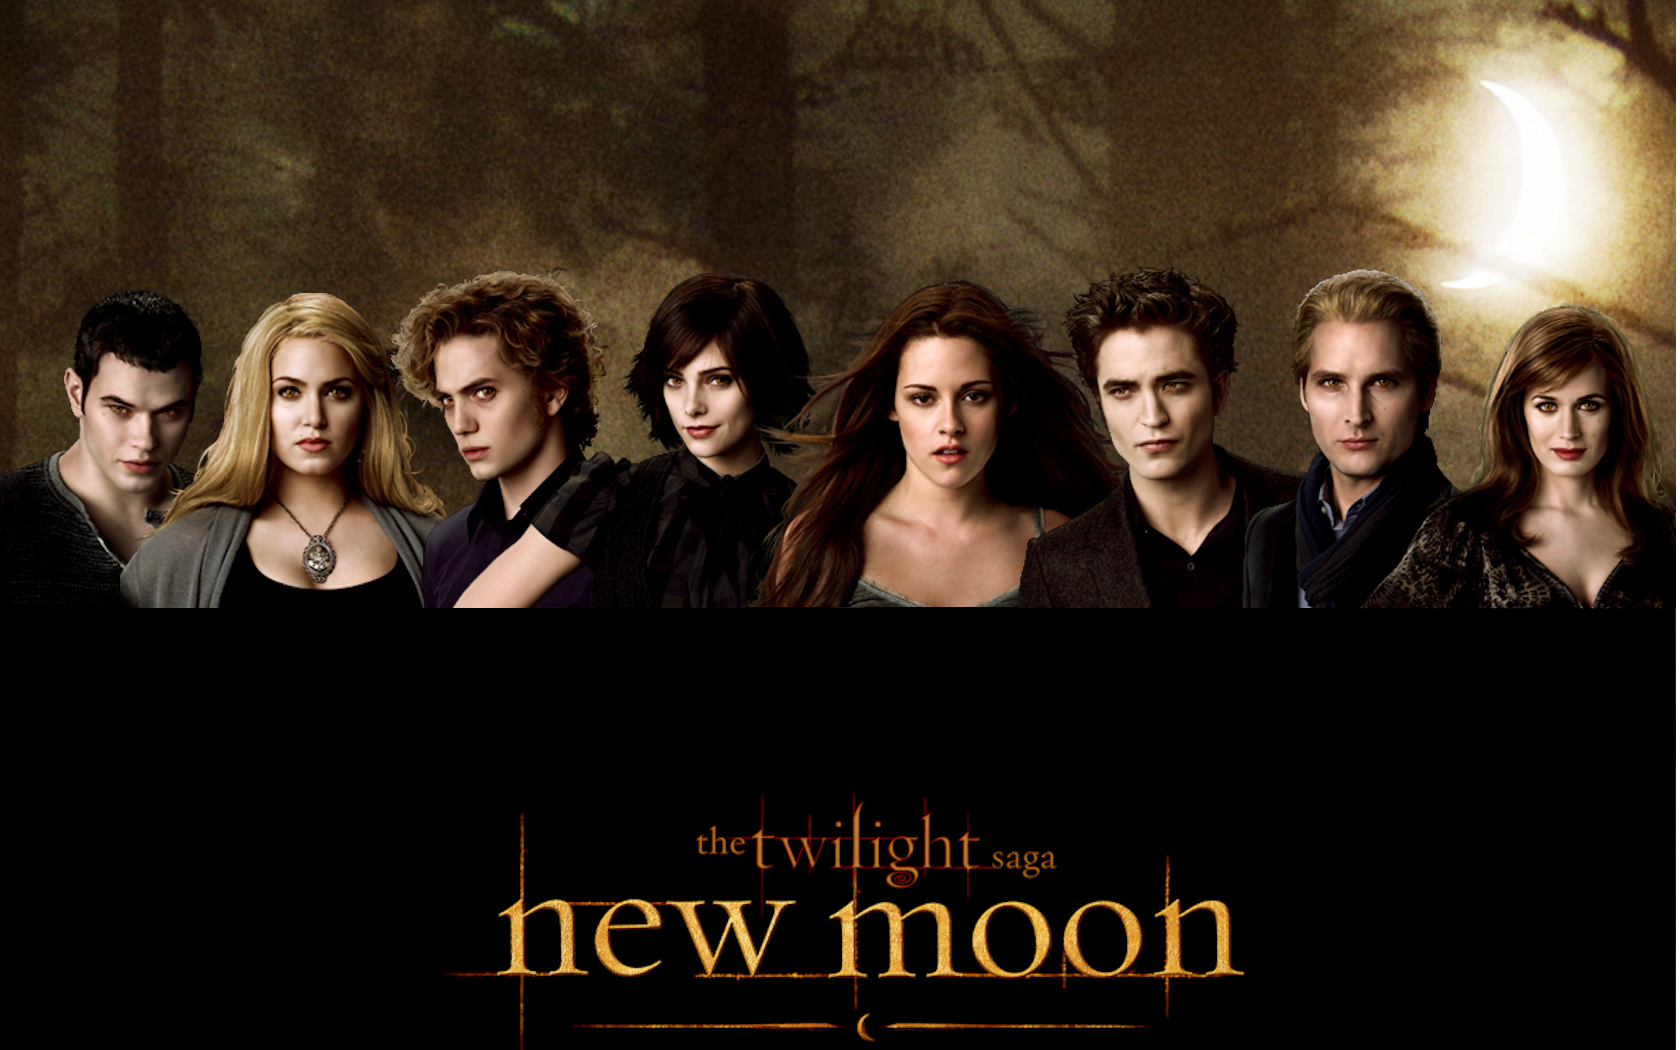 twilight saga new moon full movie download in hindi hd 720p 500mb